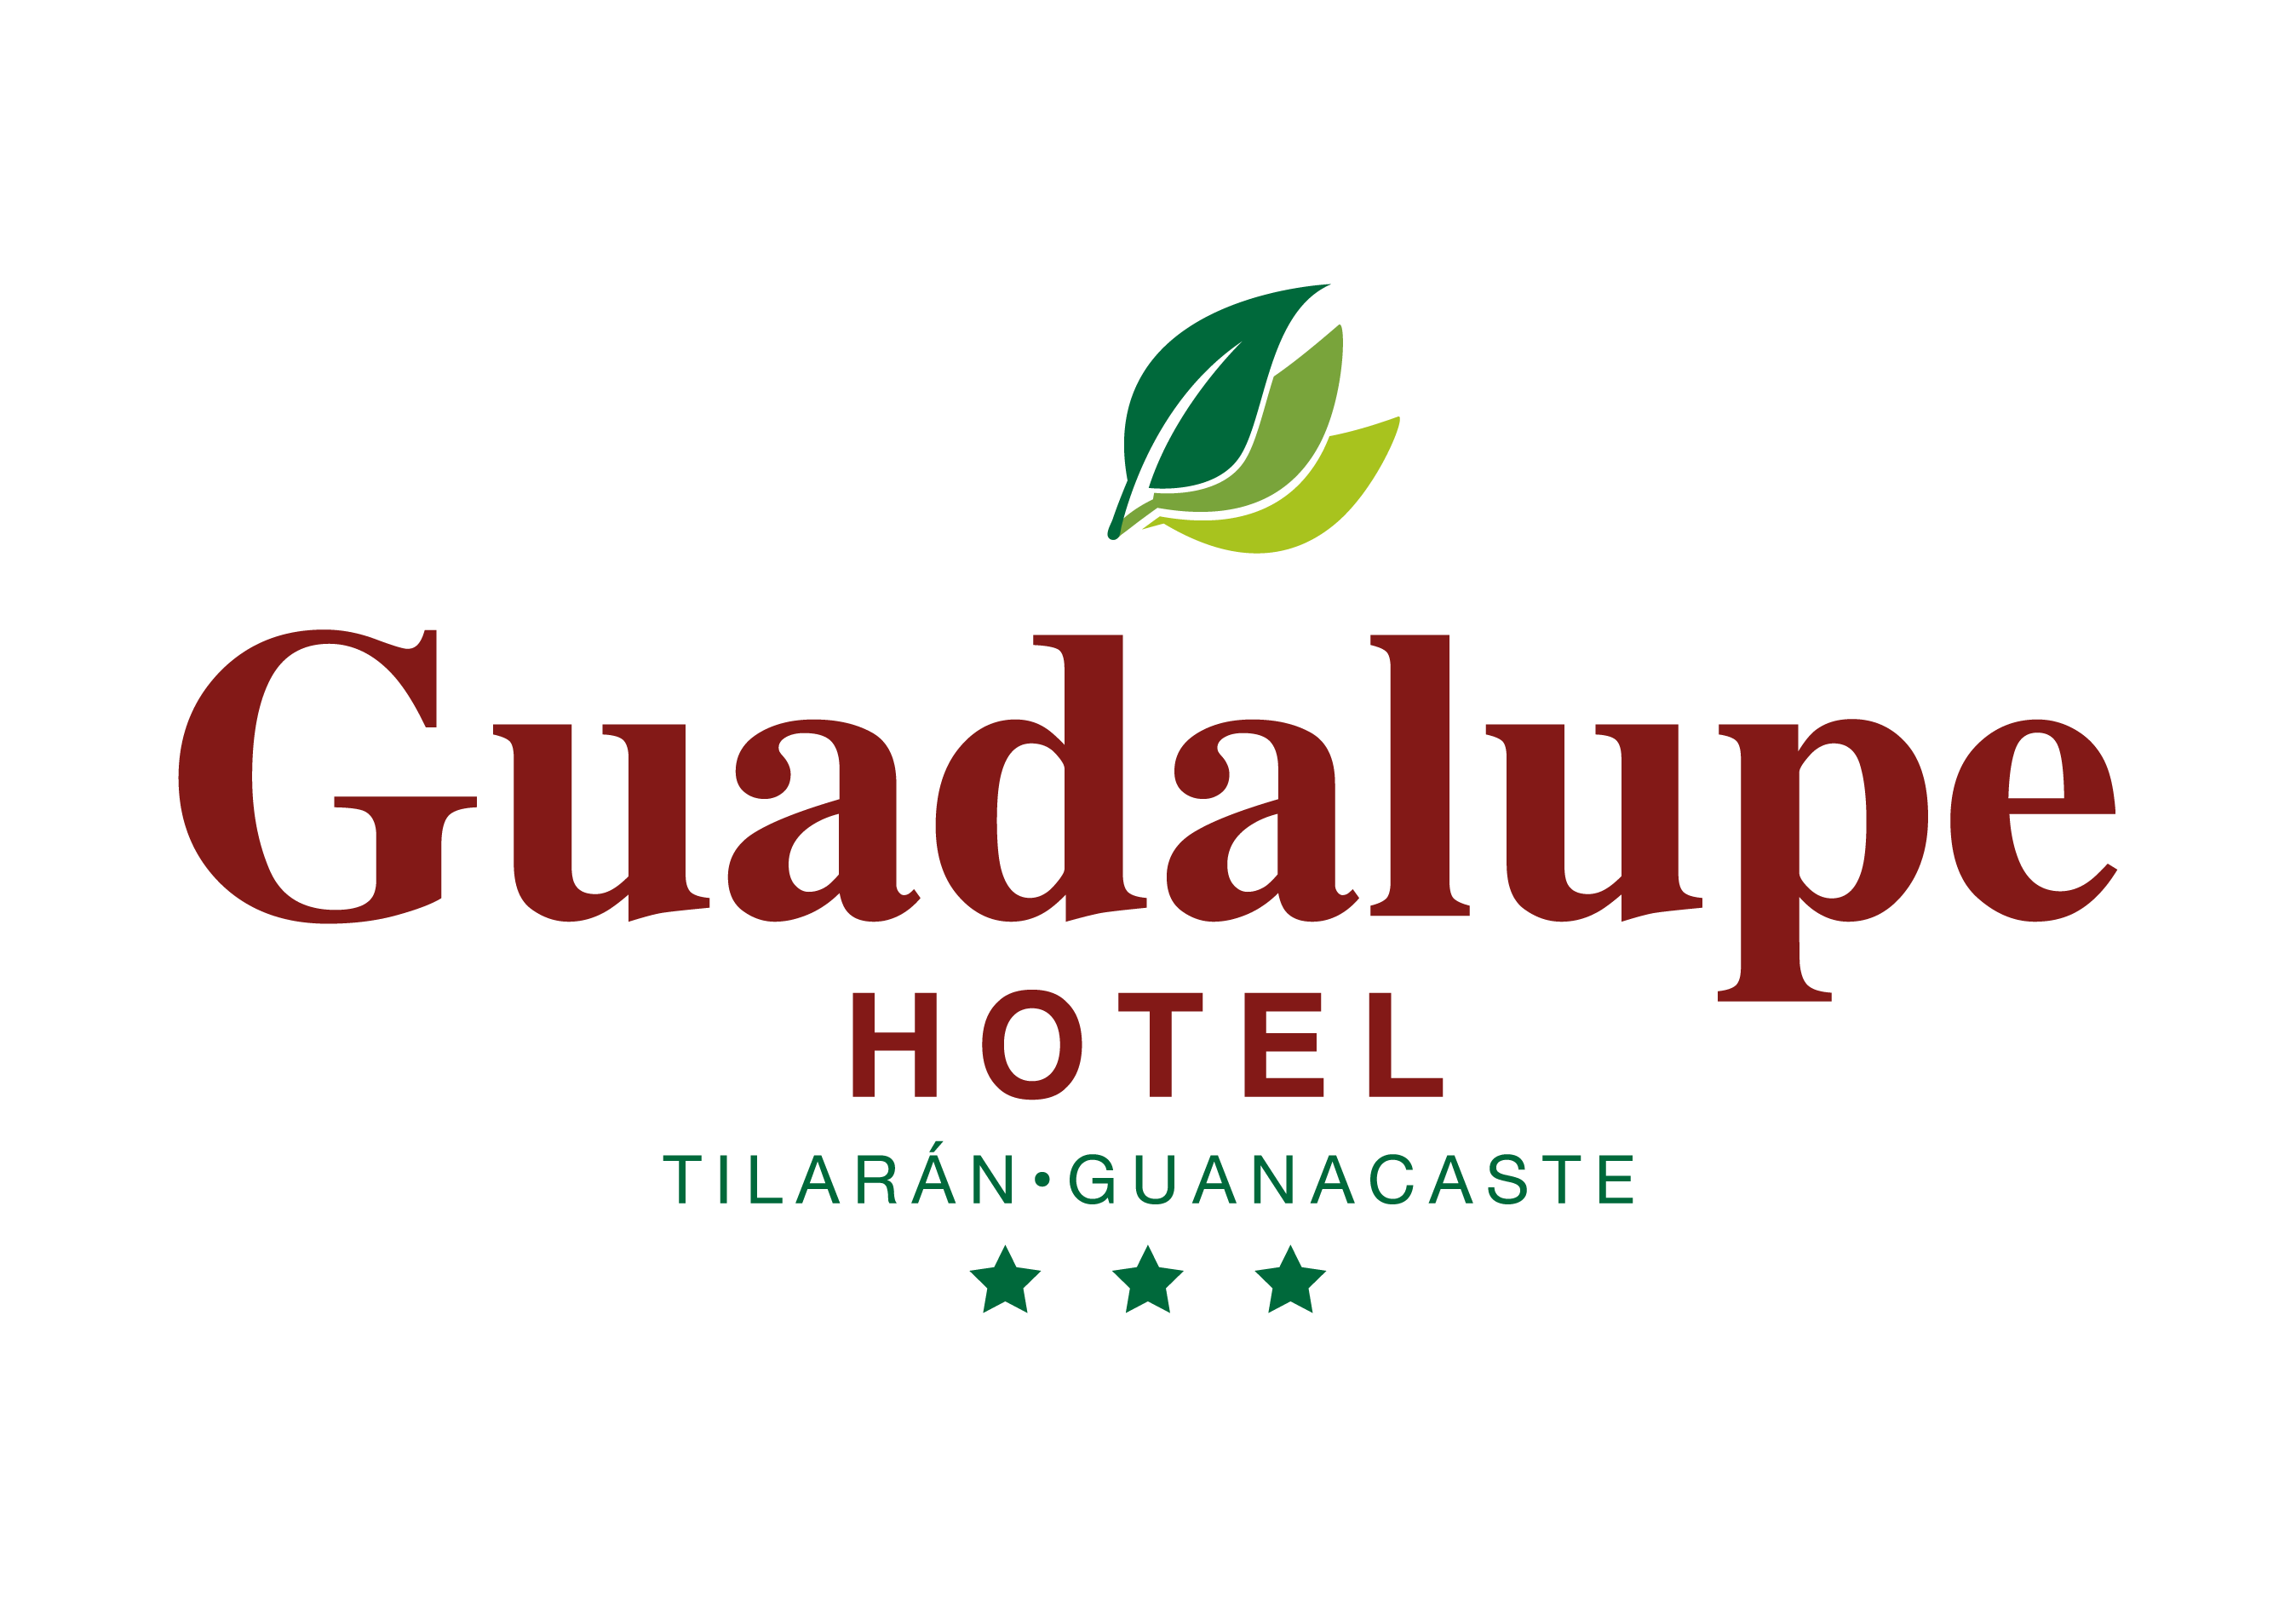 Hotel Guadalupe